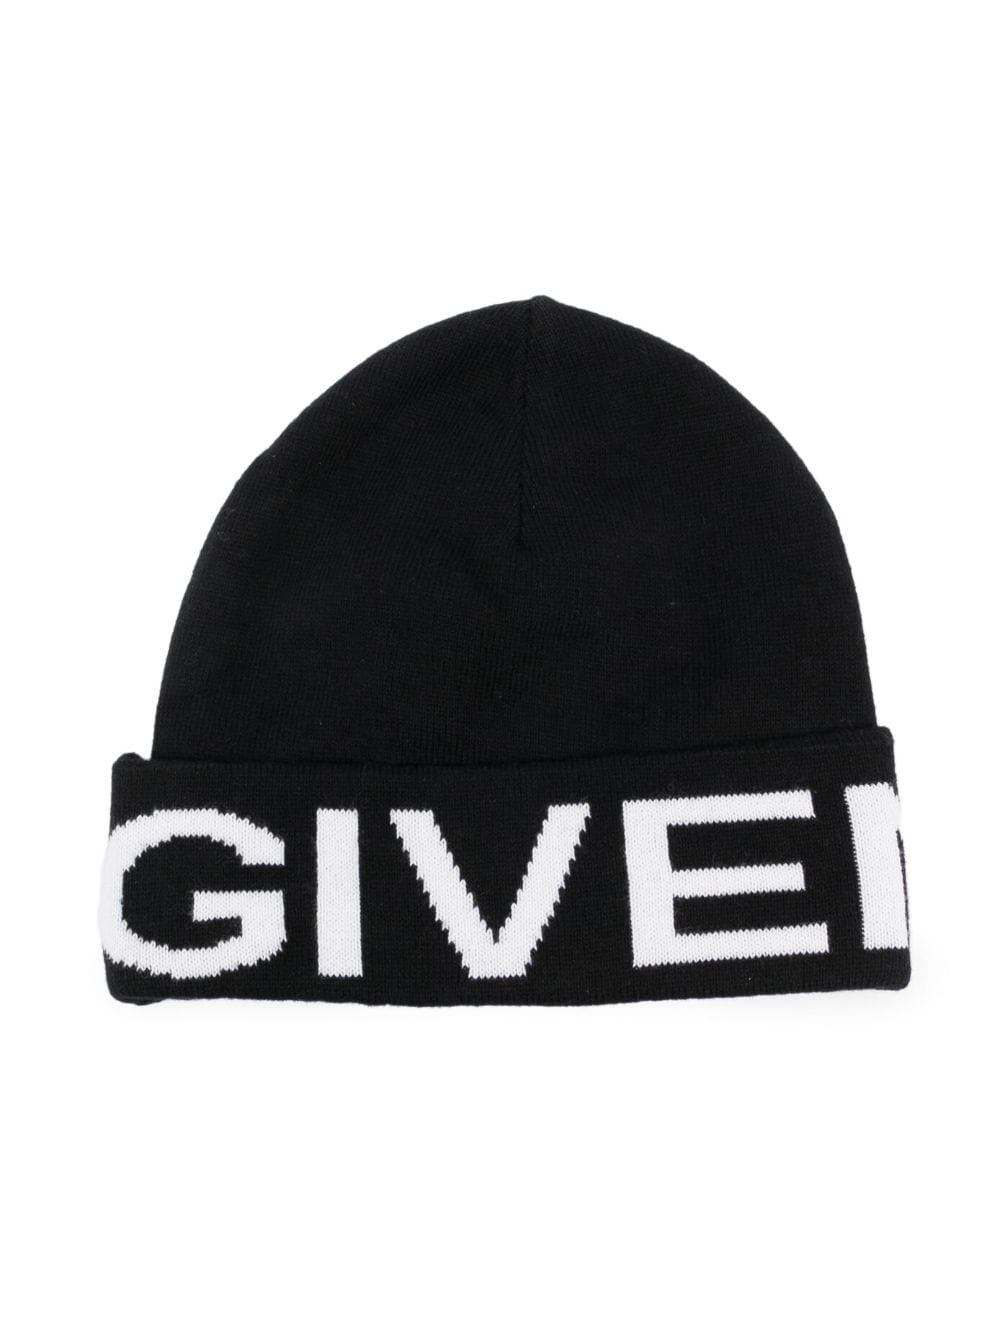 Givenchy Kids logo-print beanie hat - Black